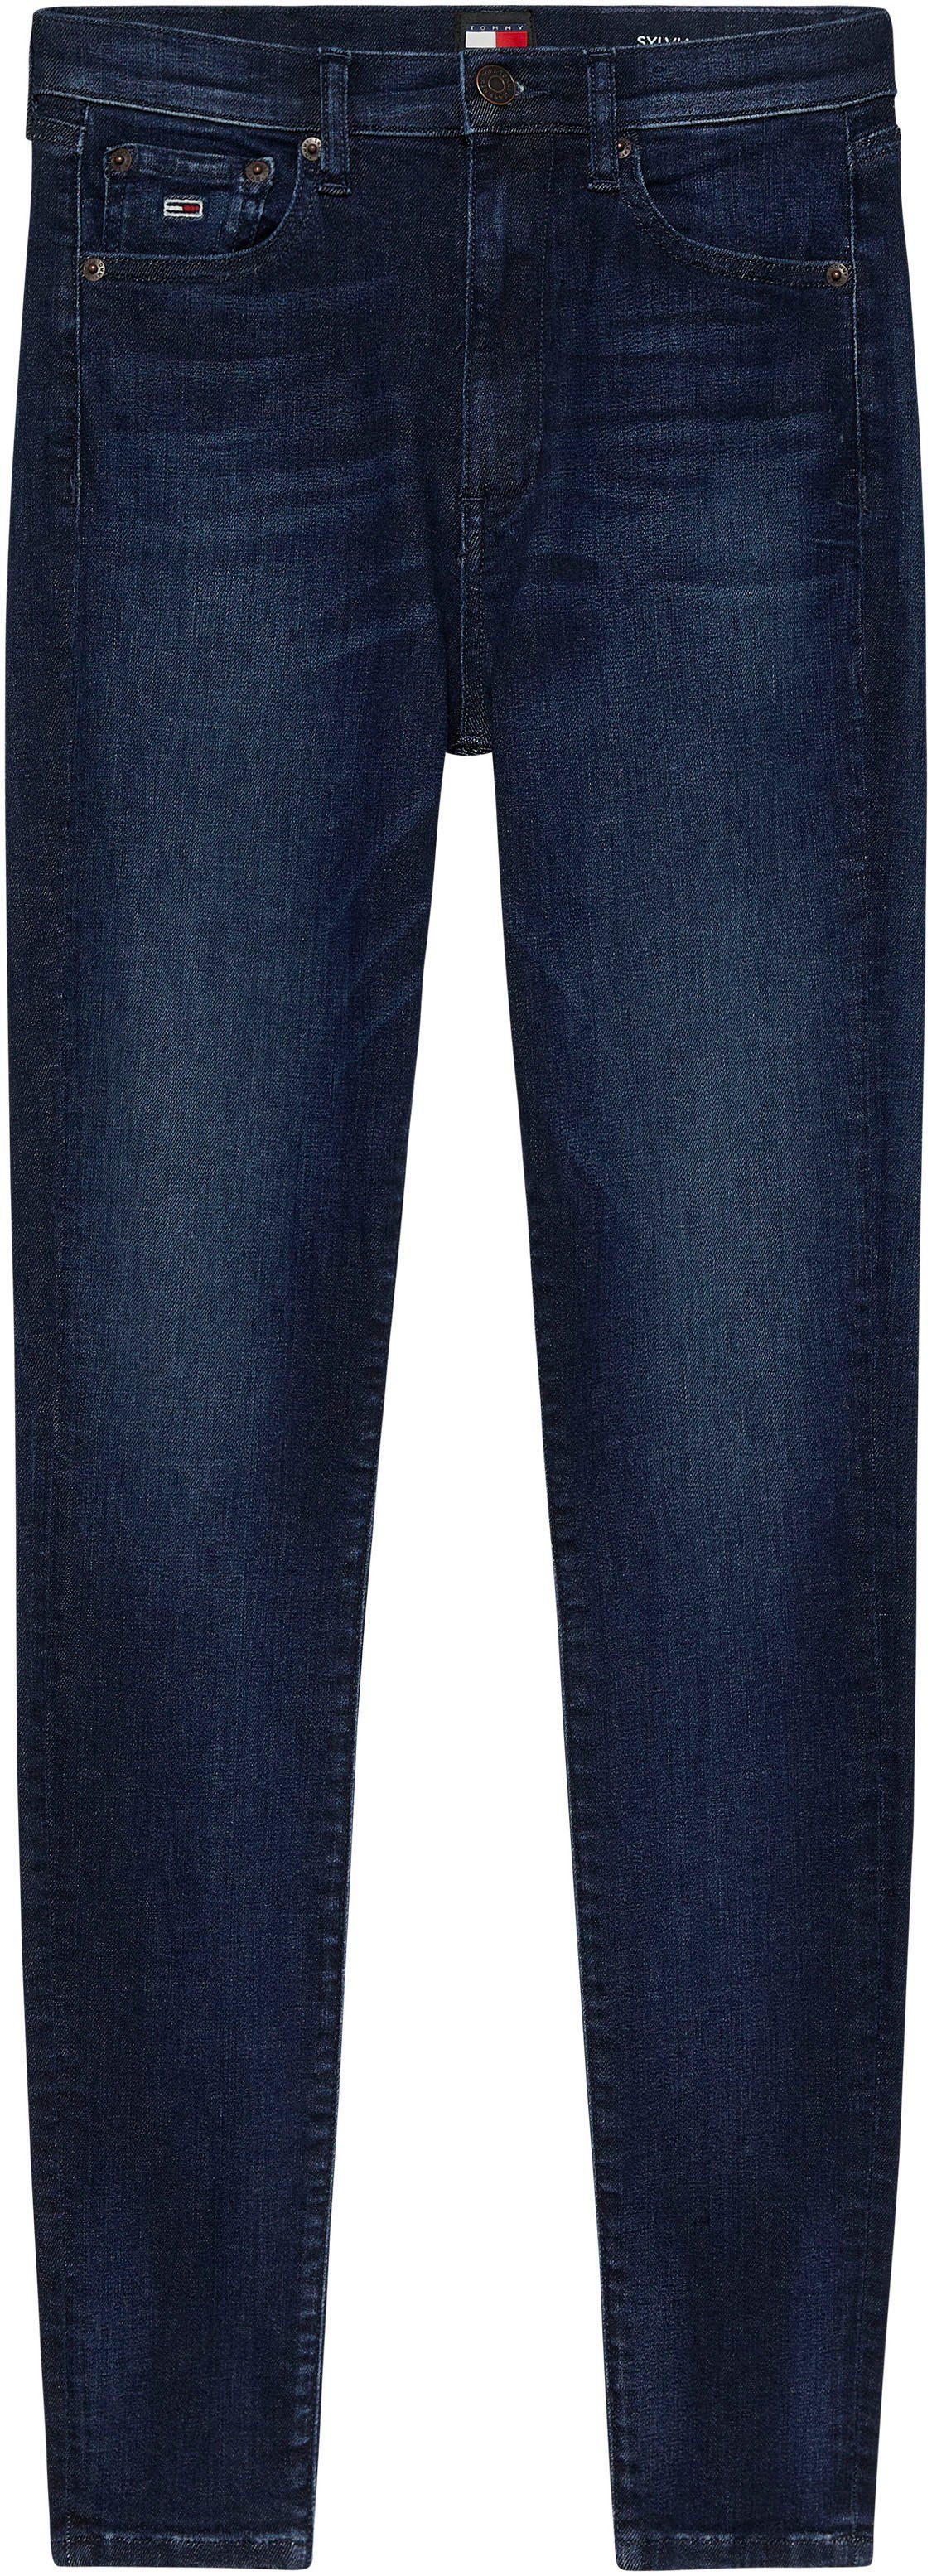 Tommy Jeans Dark Ledermarkenlabel mit Denim1 Sylvia Jeans Bequeme